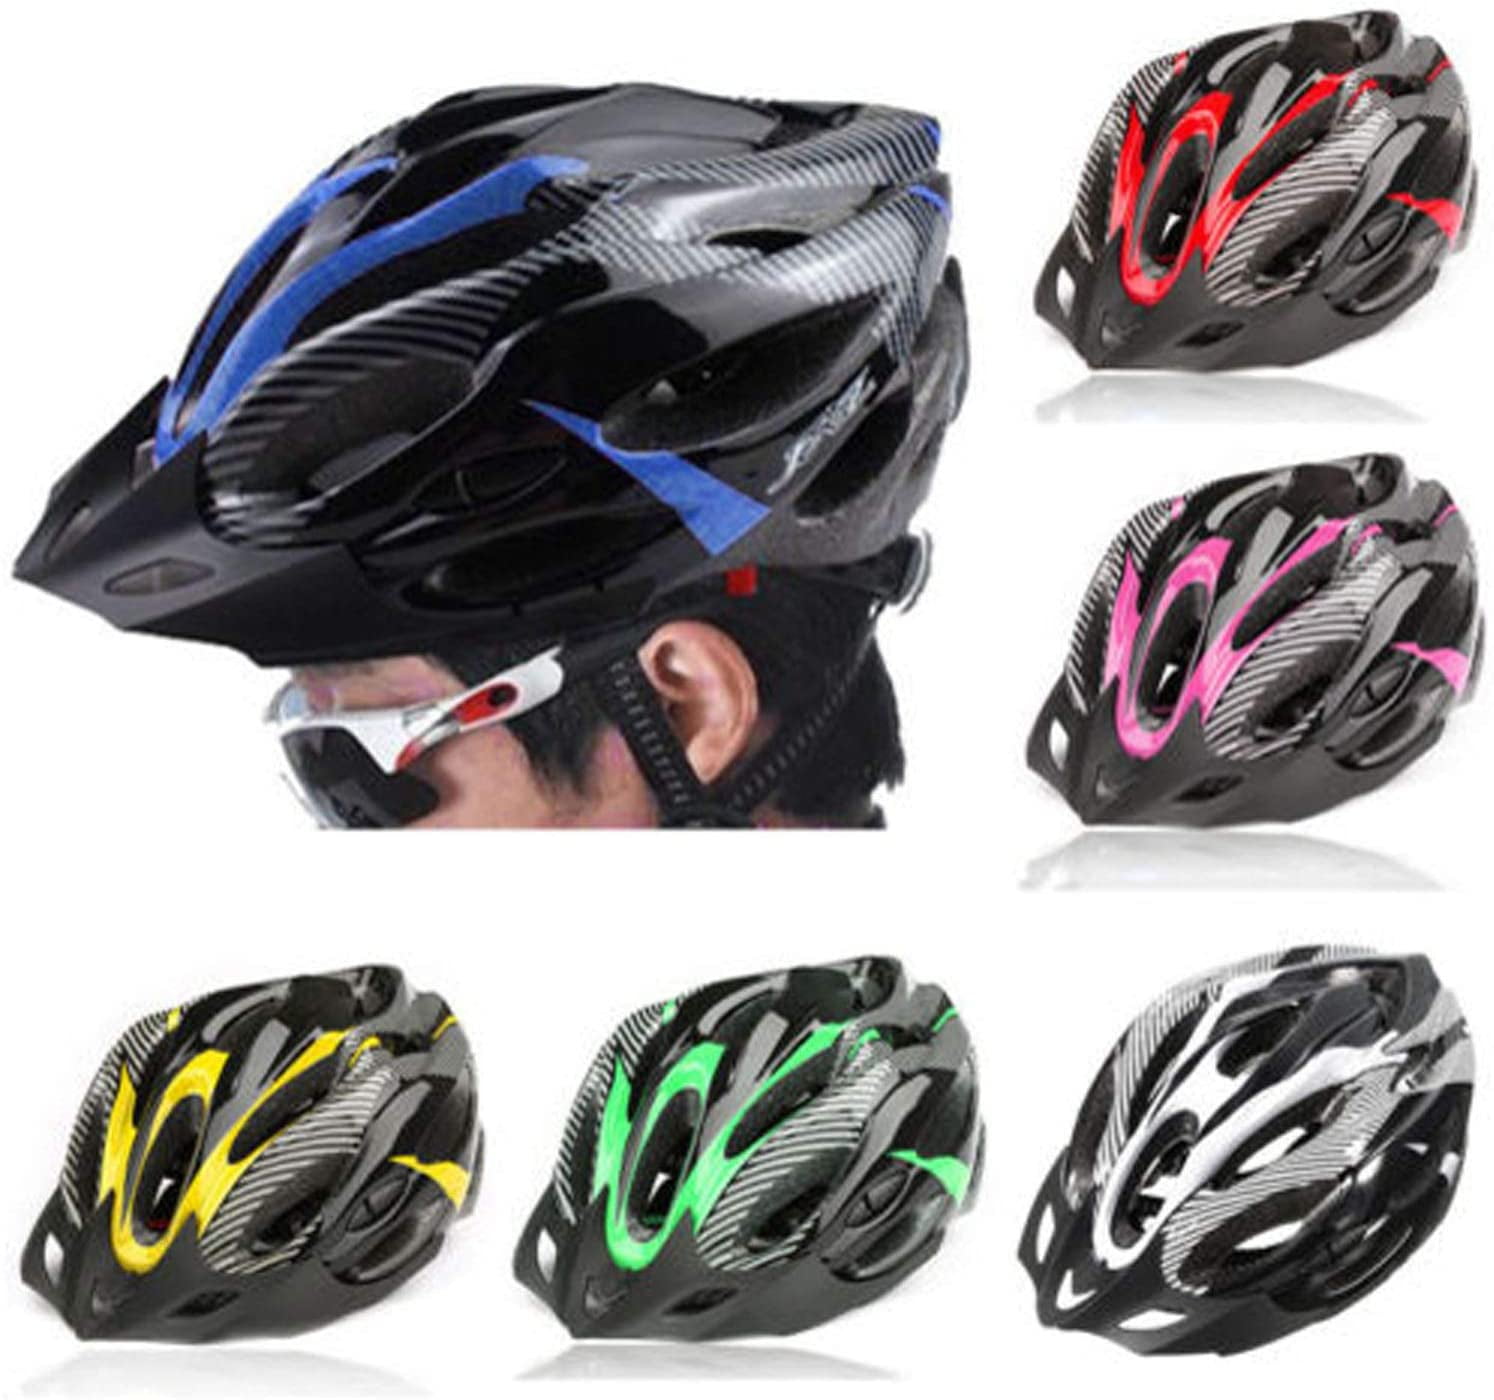 MTB Cycling Bike Bicycle Adult Children Bike Safety Helmet Adjustable Protection 